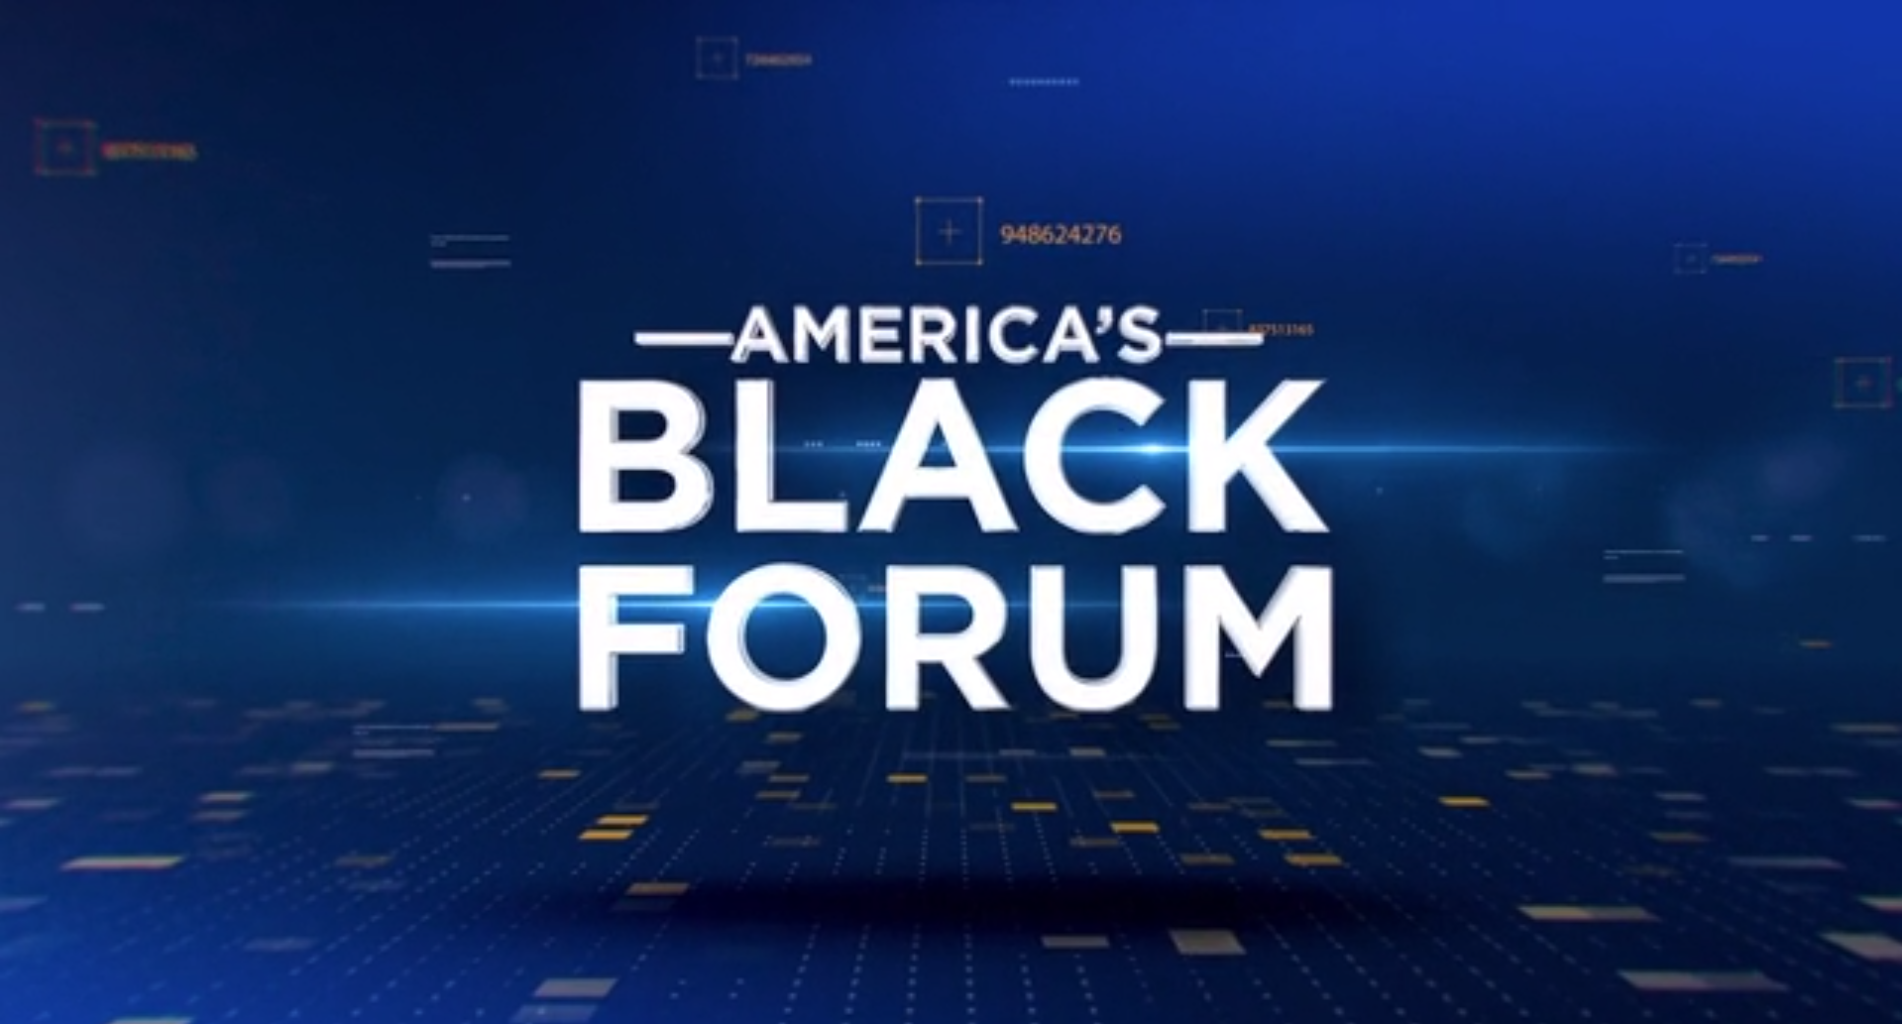 Michael Marshall’s America’s Black Forum Interview Airs